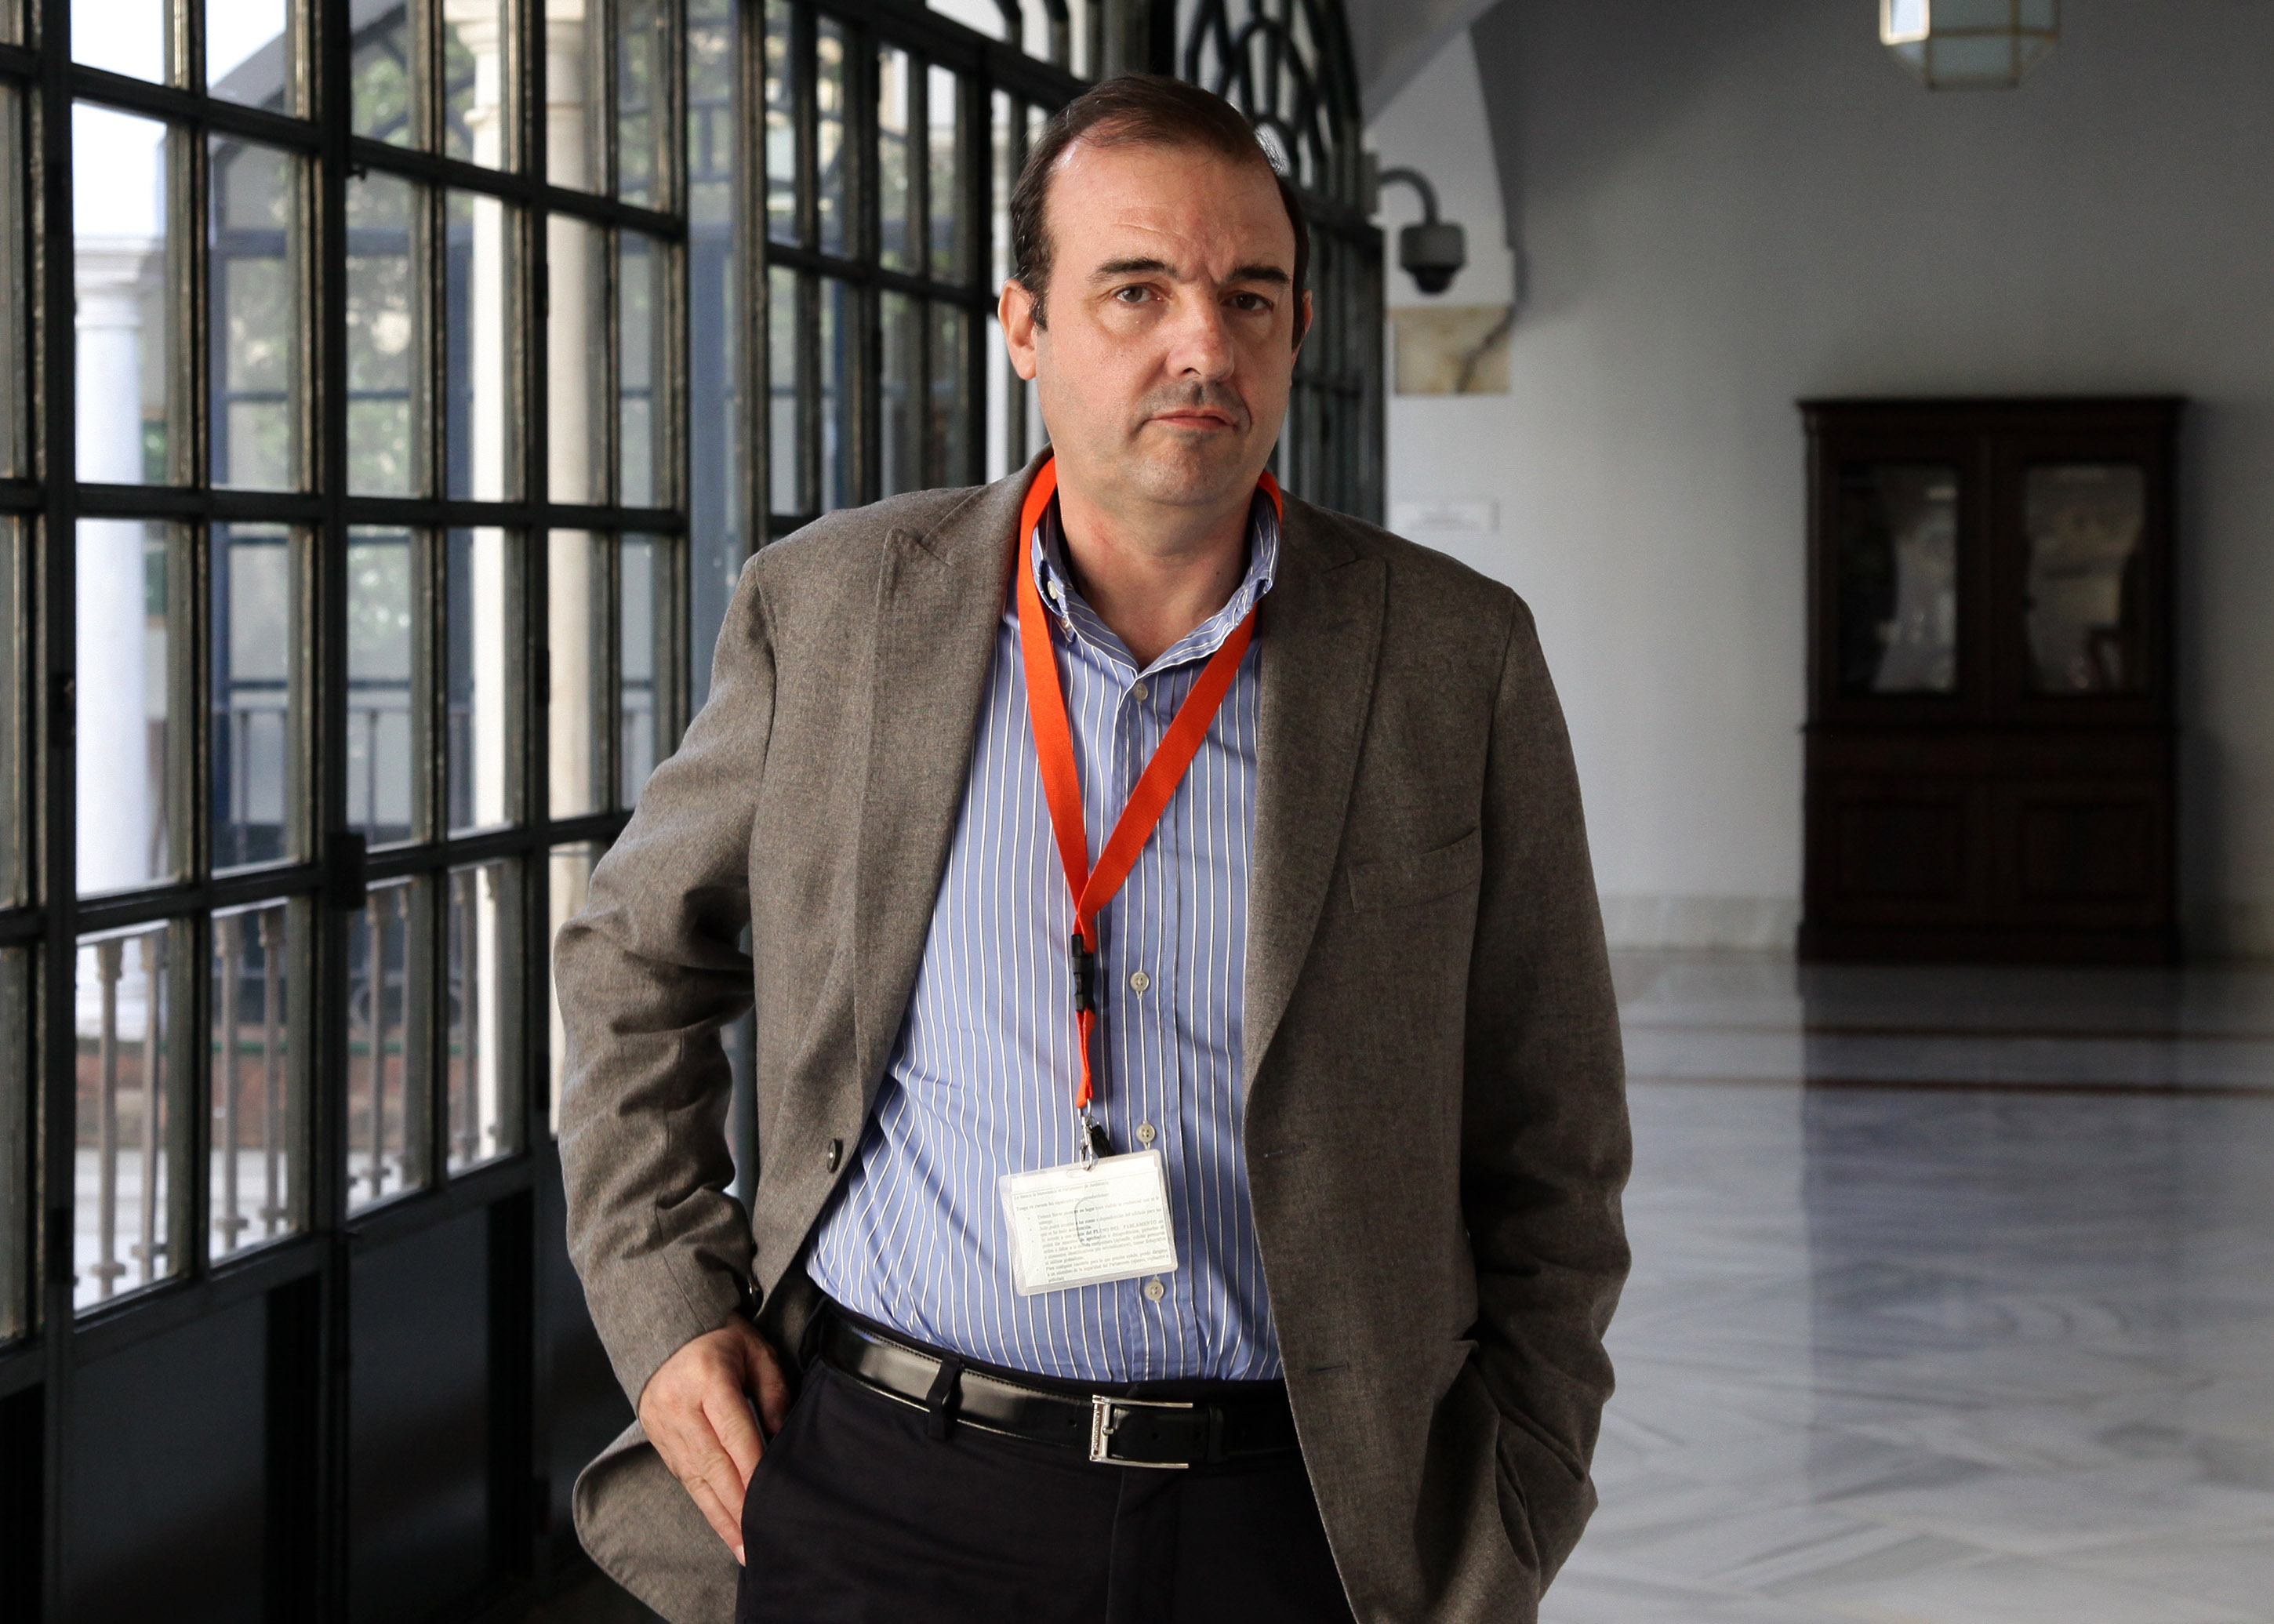 Enrique Iznaola, en representacin de la Asociacin de Festivales Audiovisuales de Andaluca (ASFAAN)